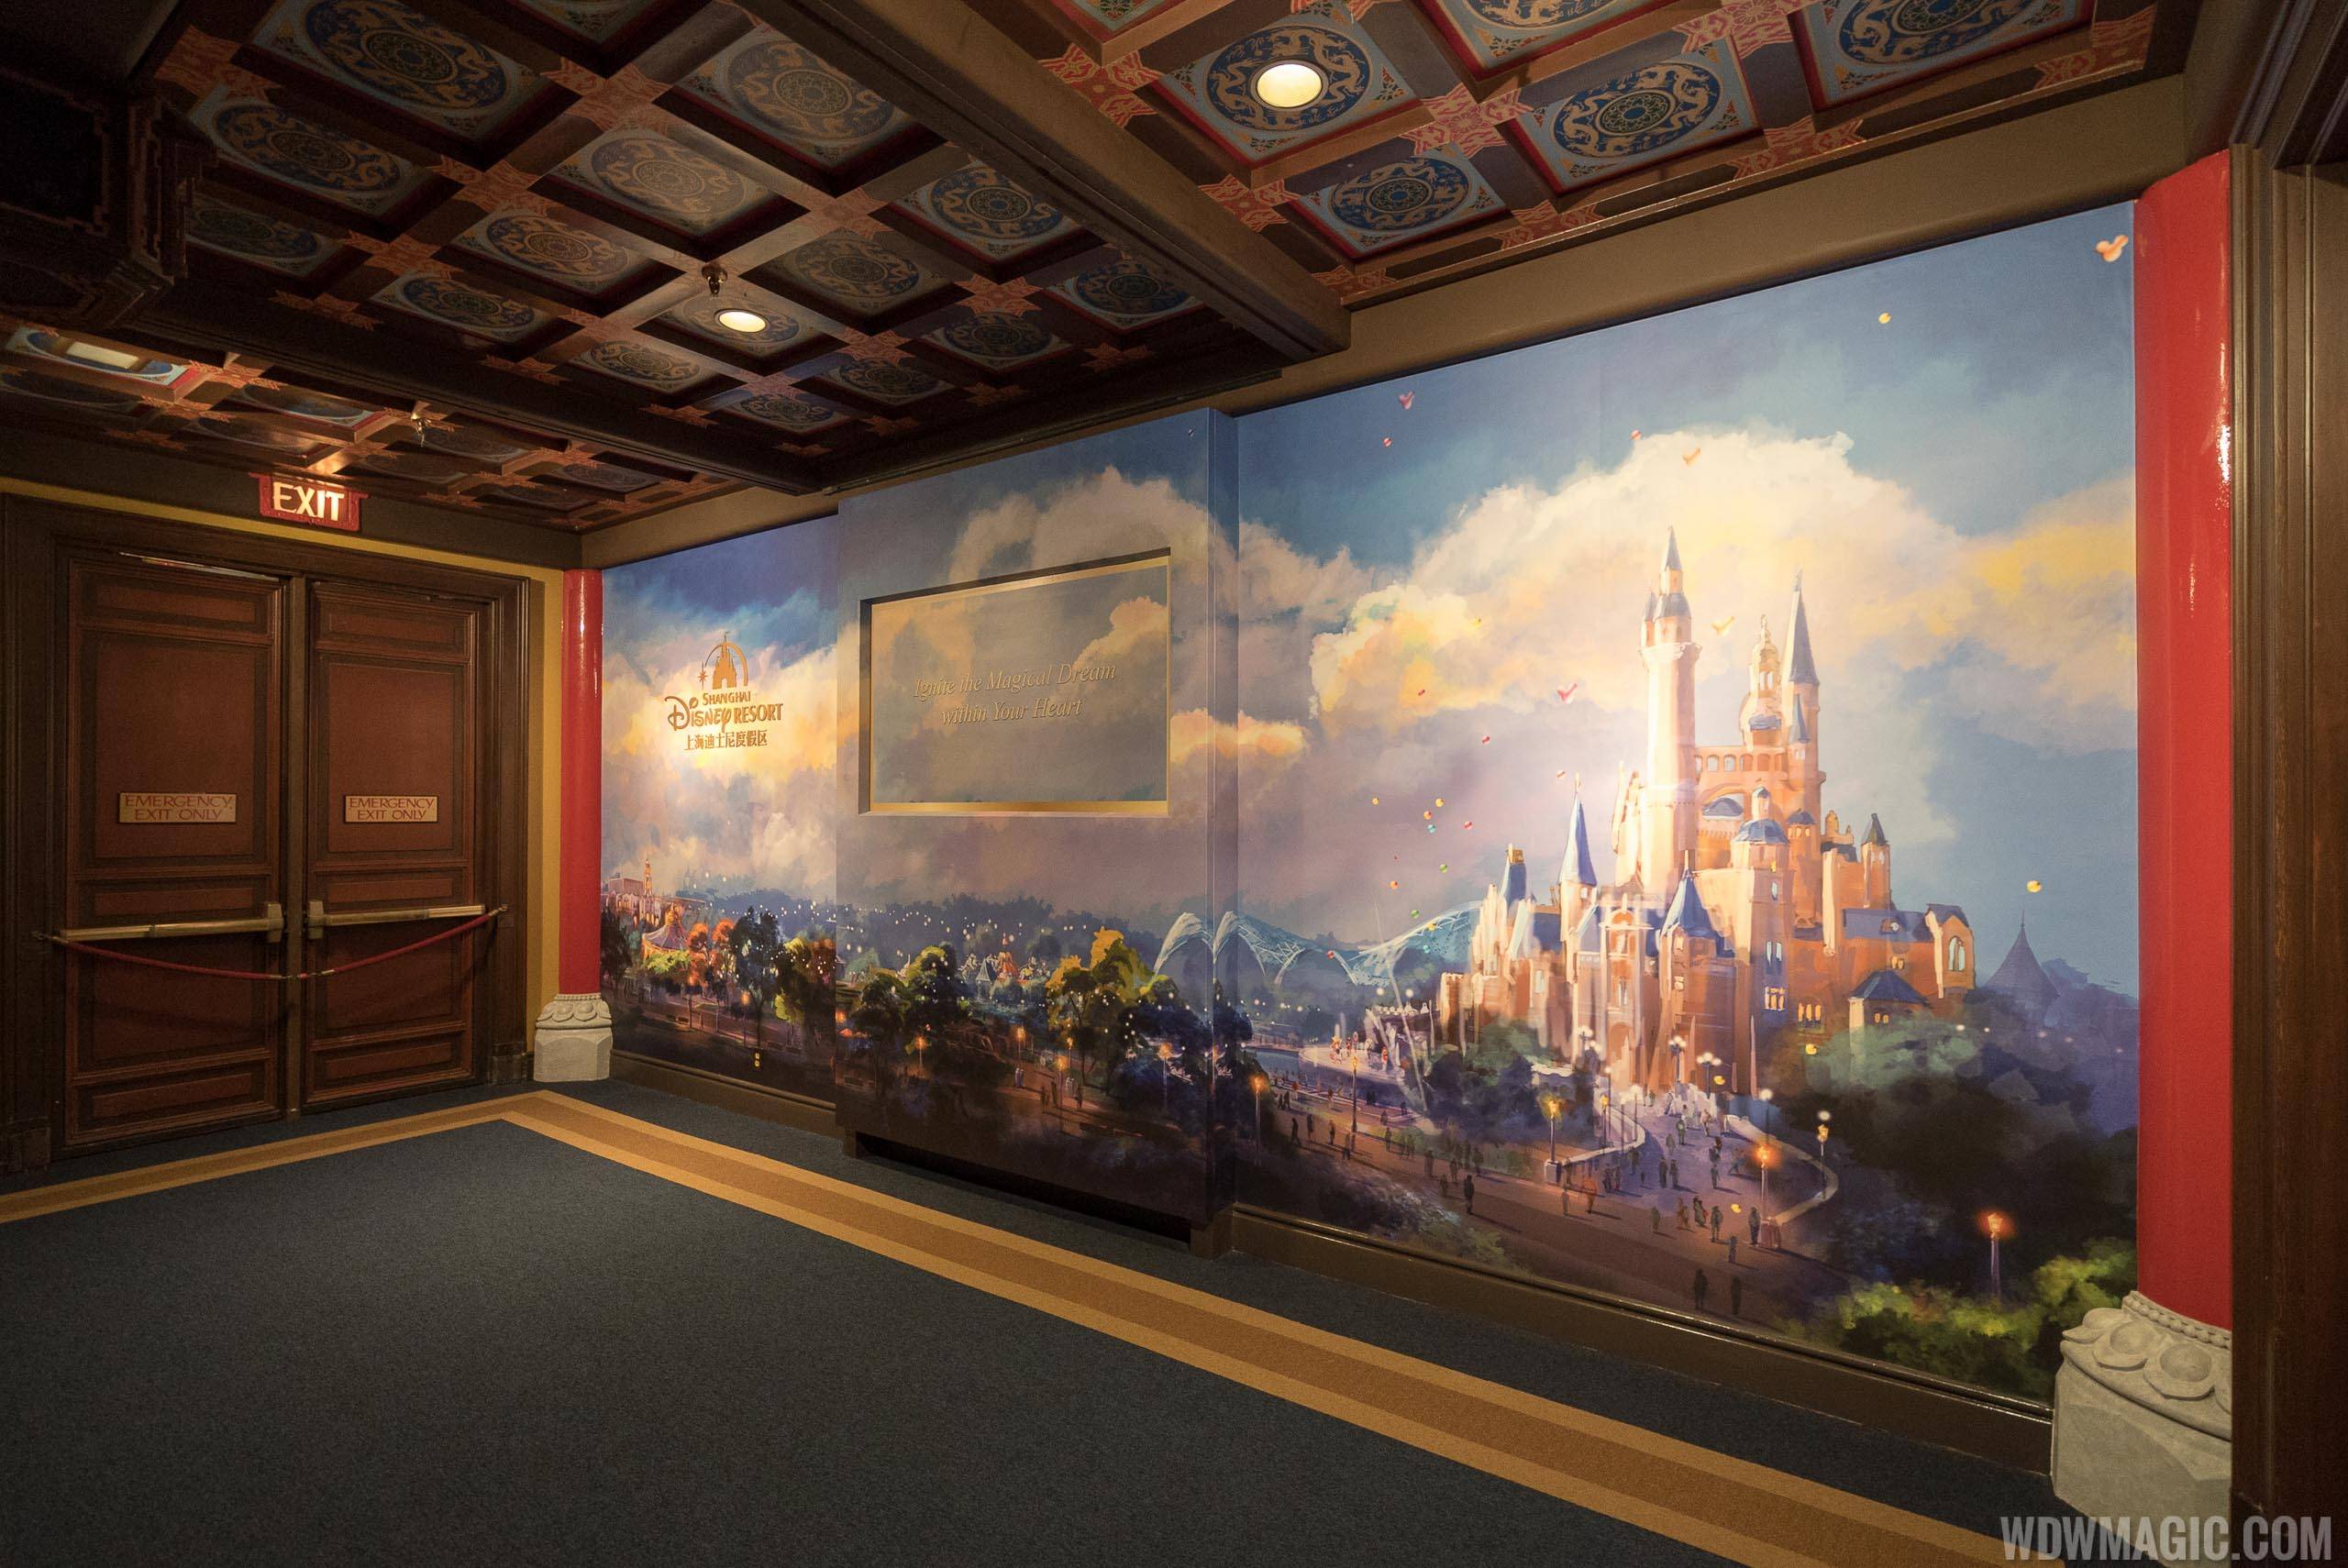 Inside Shanghai Disney Resort